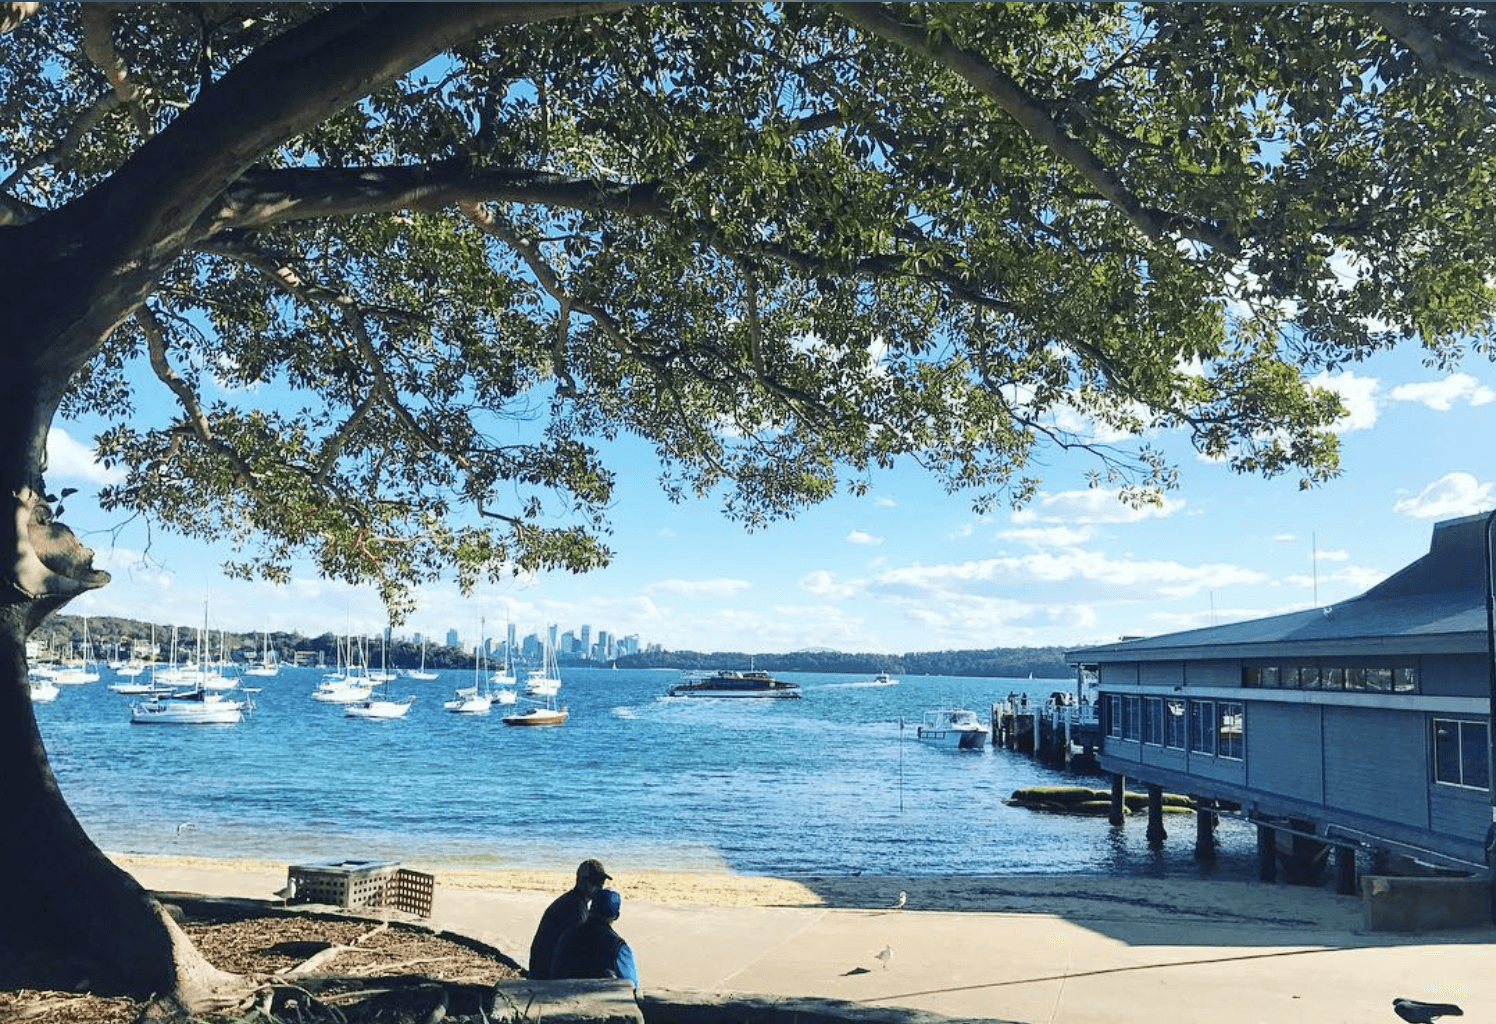 Visit Sydney's exclusive harbour suburbs - Watsons Bay